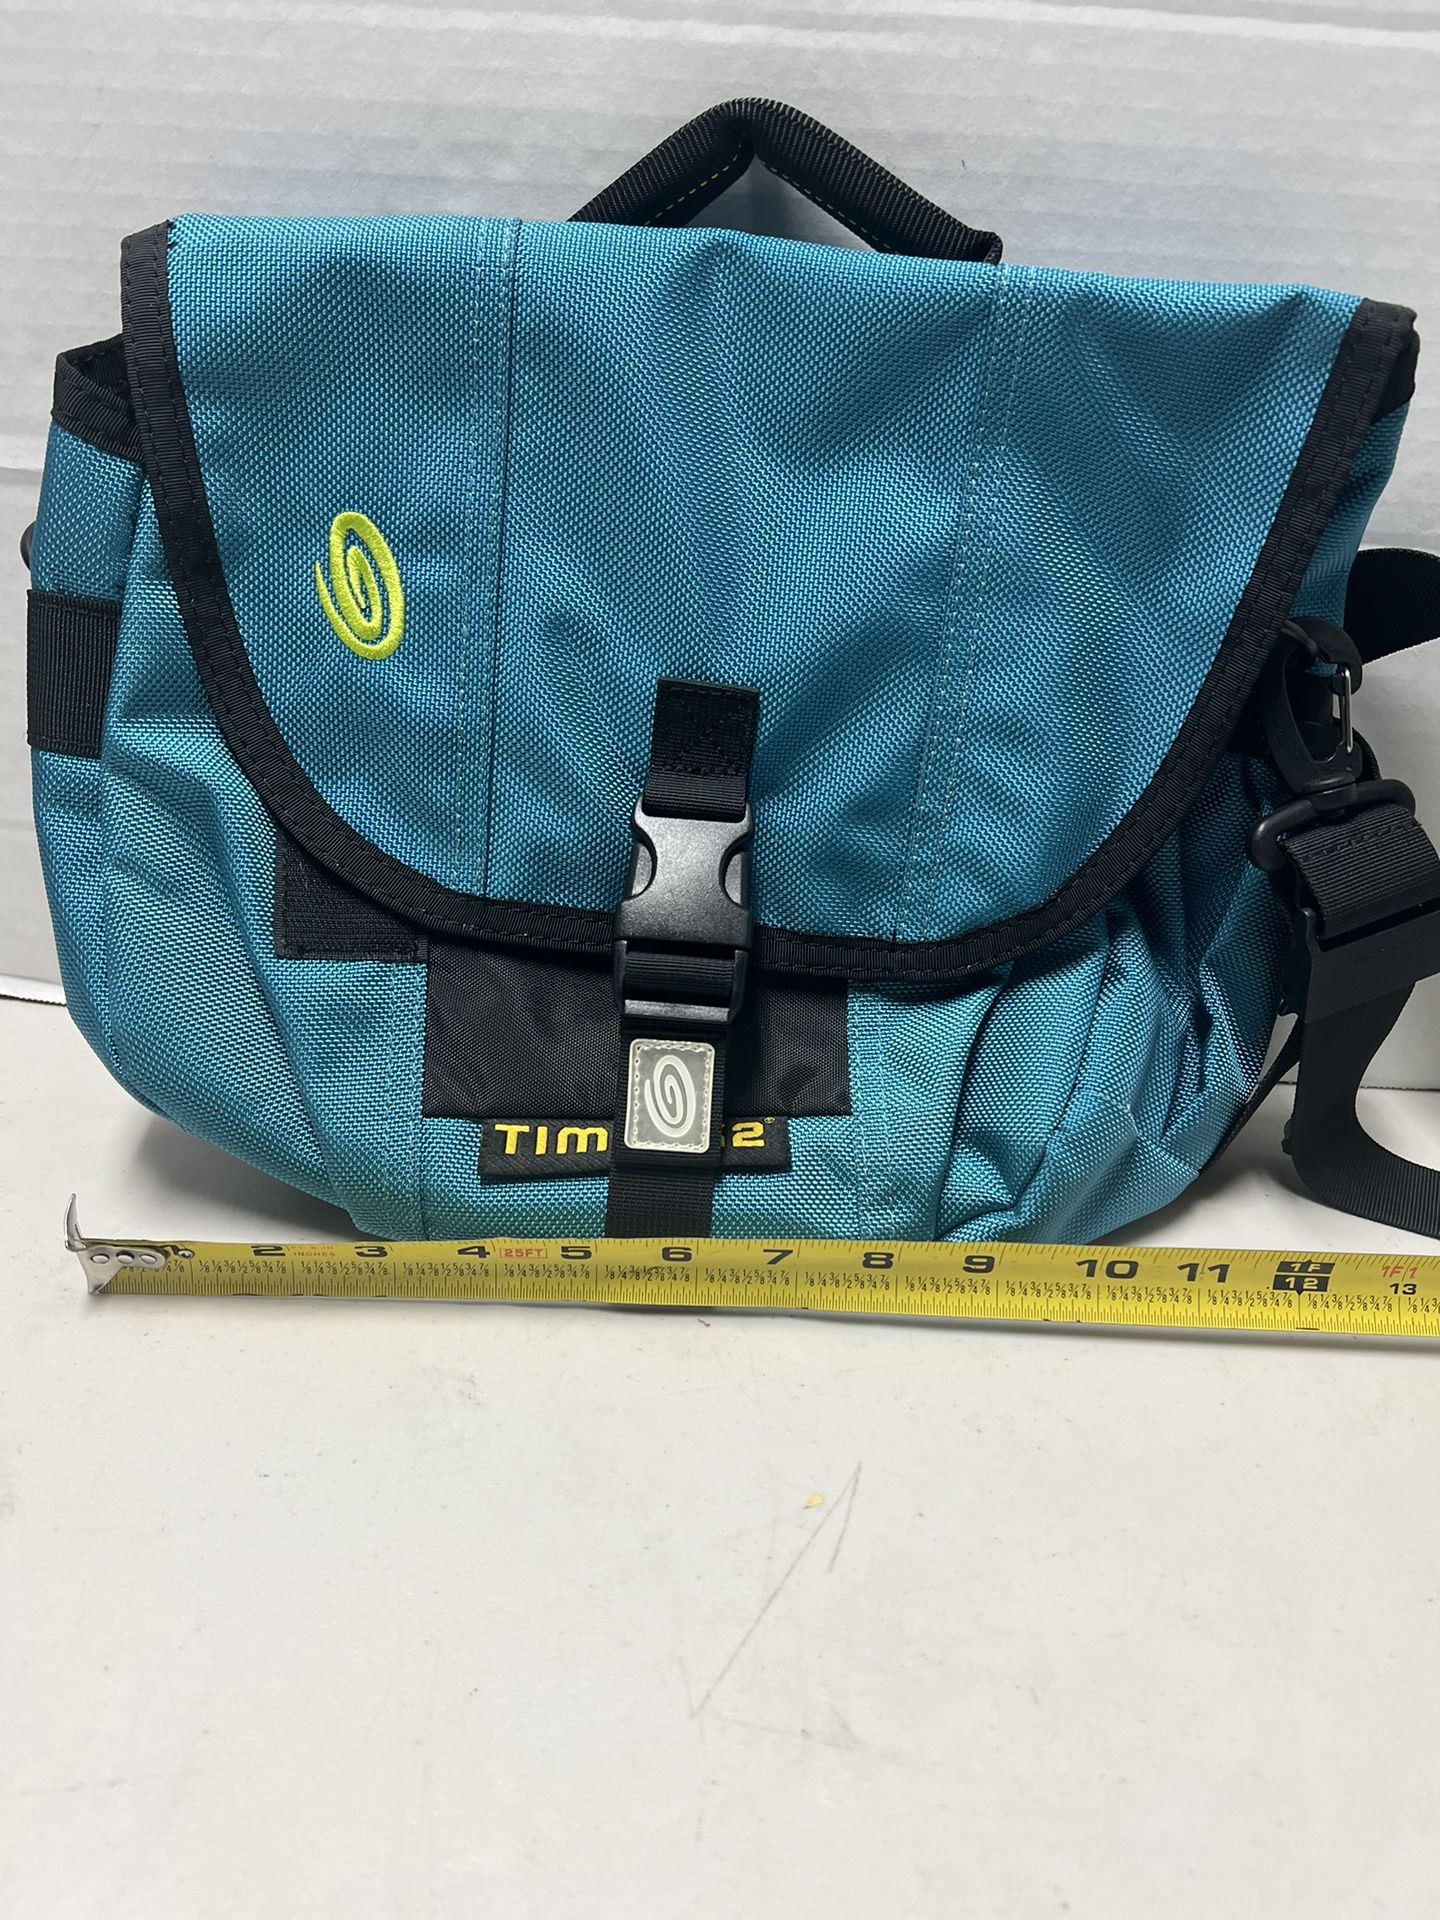 Timbuk2 Classic Messenger Bag - Blue Great Shape Small Bag for